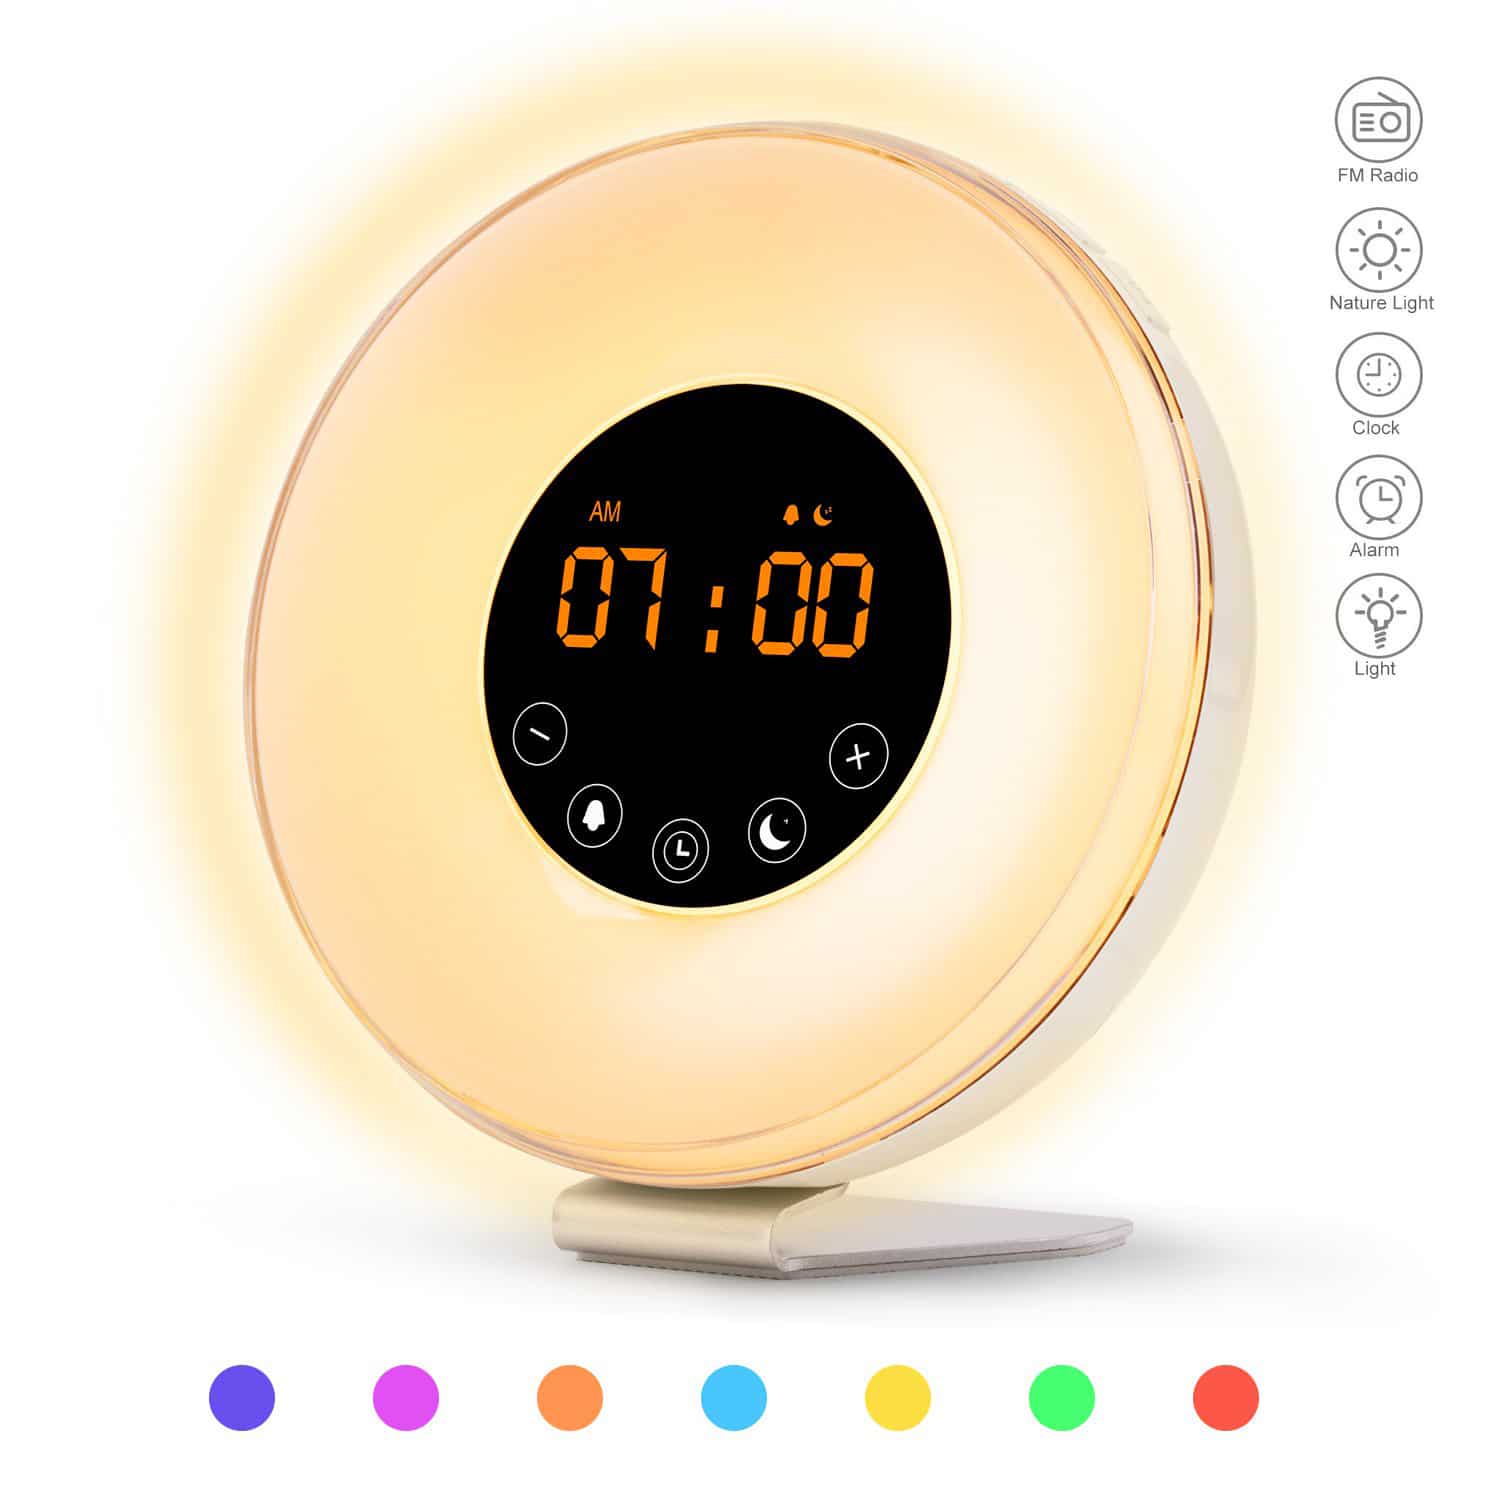 natural light alarm clock for cruise